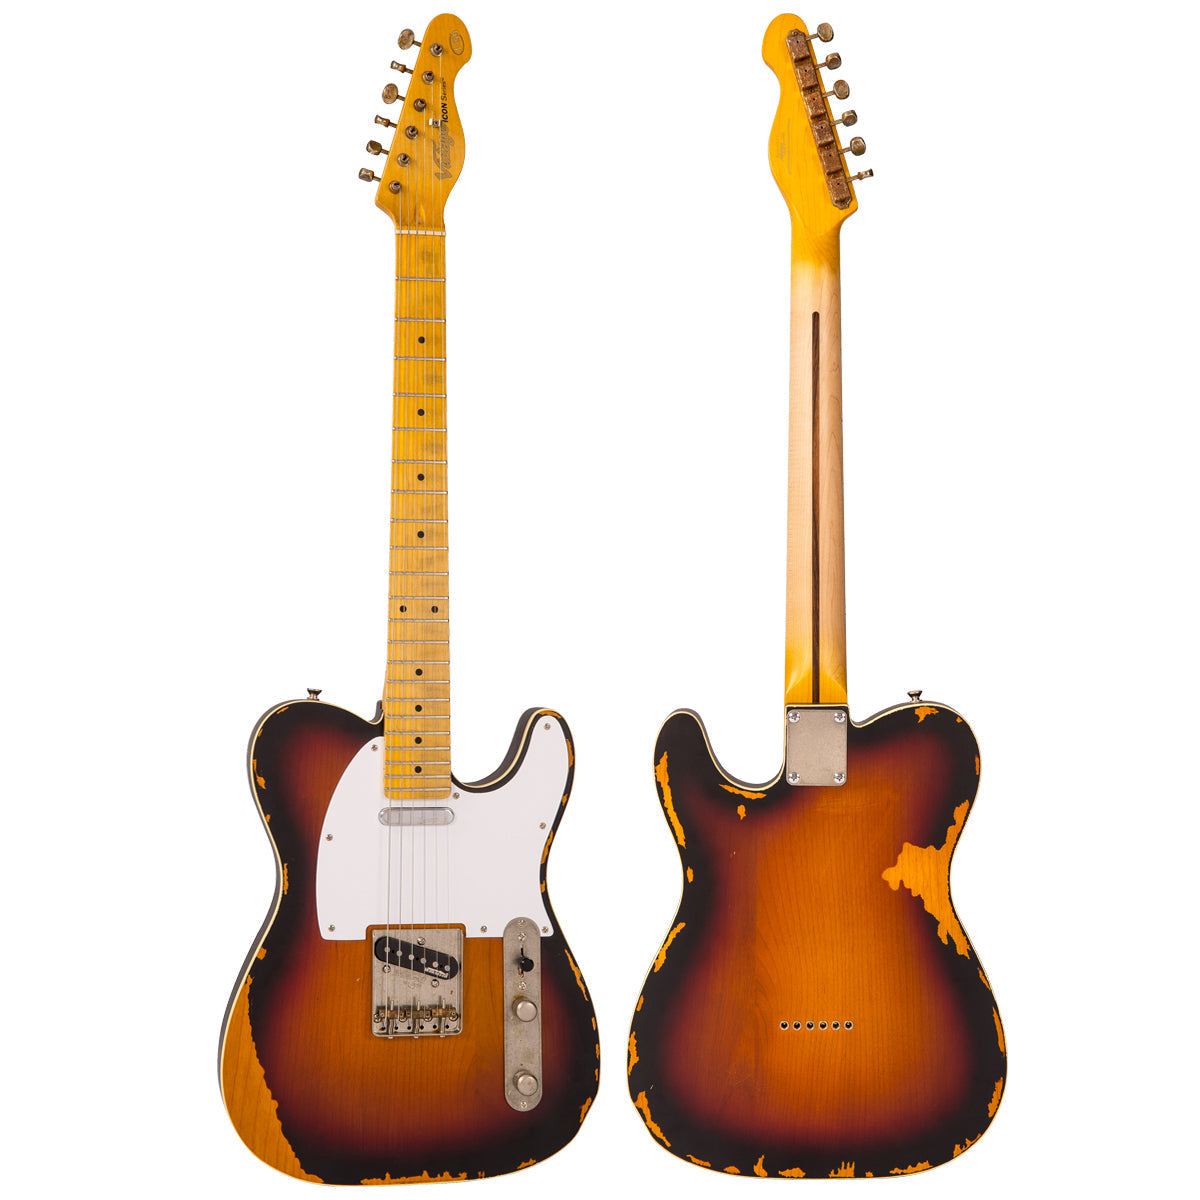 Vintage V59 ICON Electric Guitar ~ Distressed Sunburst, Electric Guitar for sale at Richards Guitars.